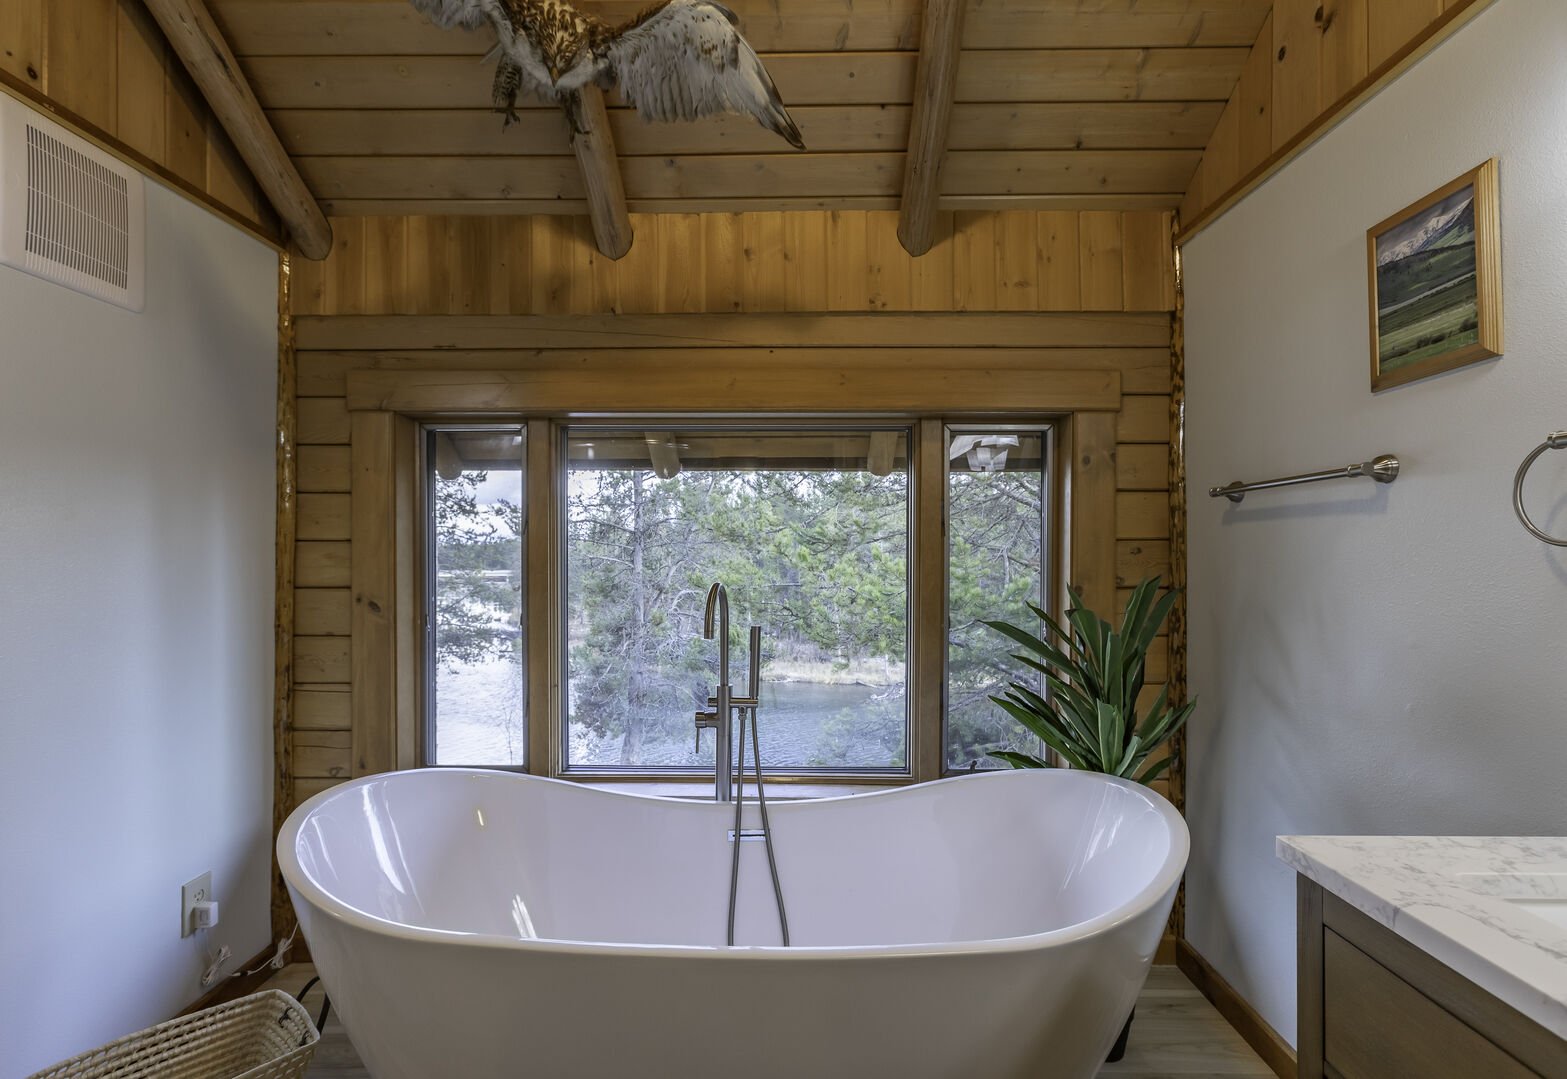 Buffalo Bliss - shared full bath on upper level w/ soaker tub and walk in shower